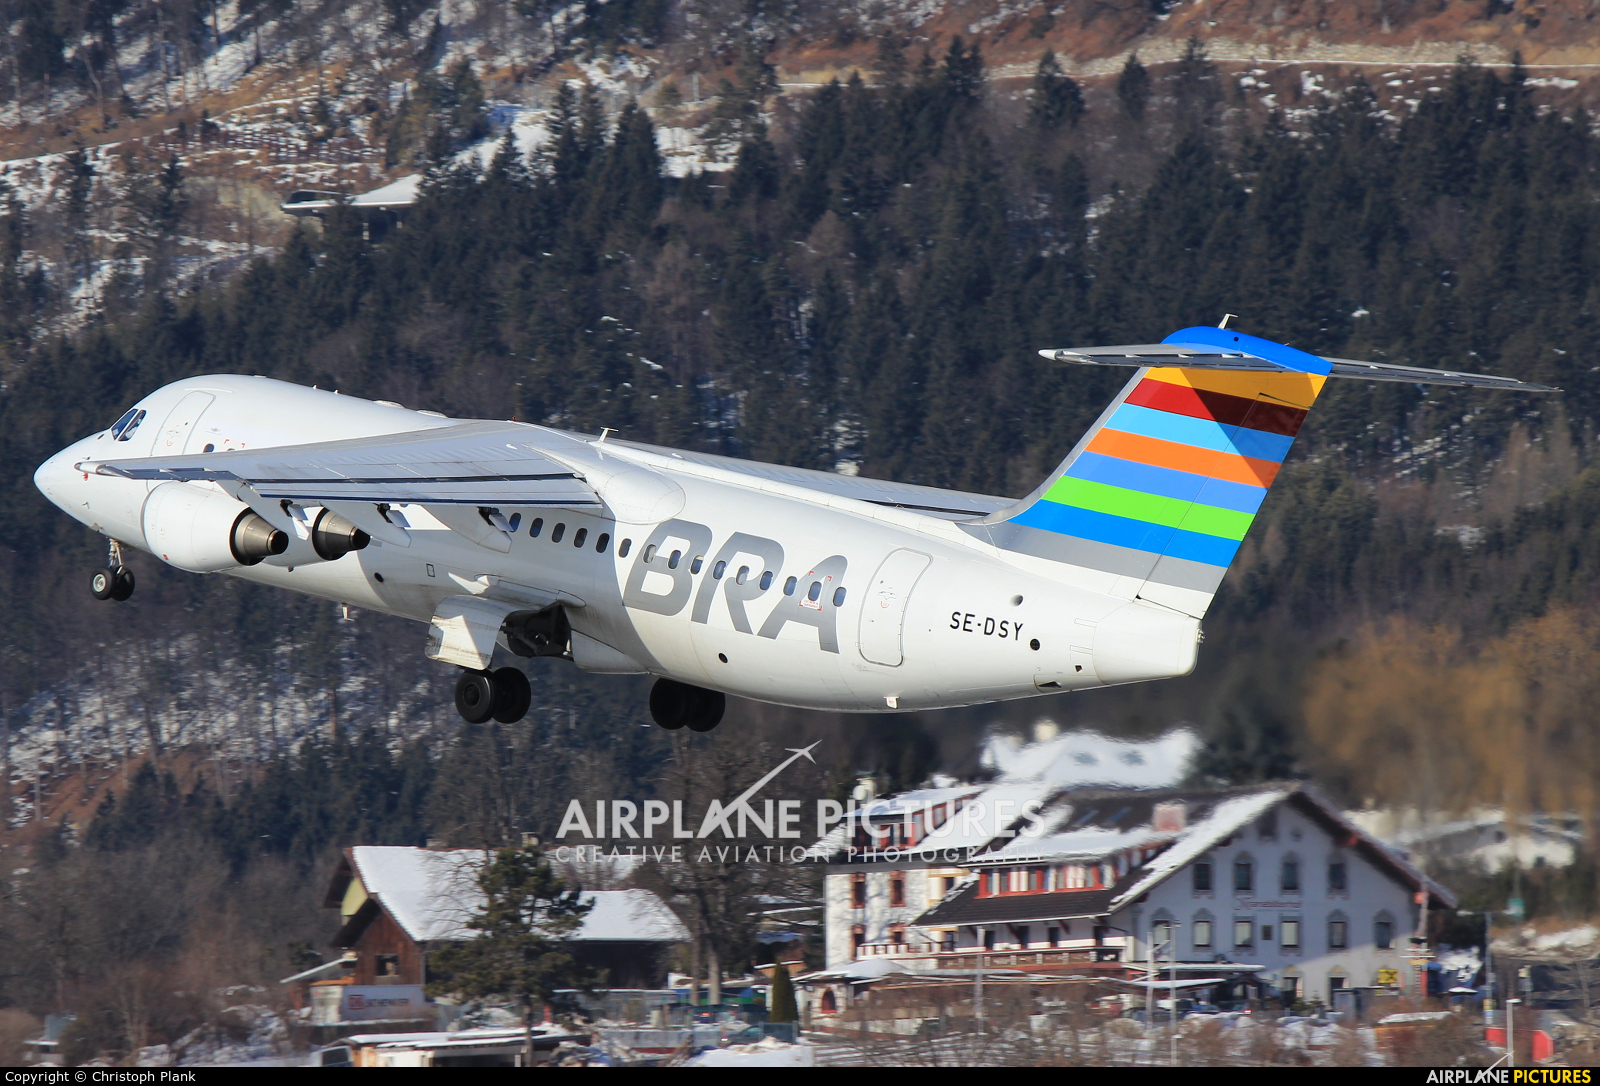 BRA (Sweden) SE-DSY aircraft at Innsbruck